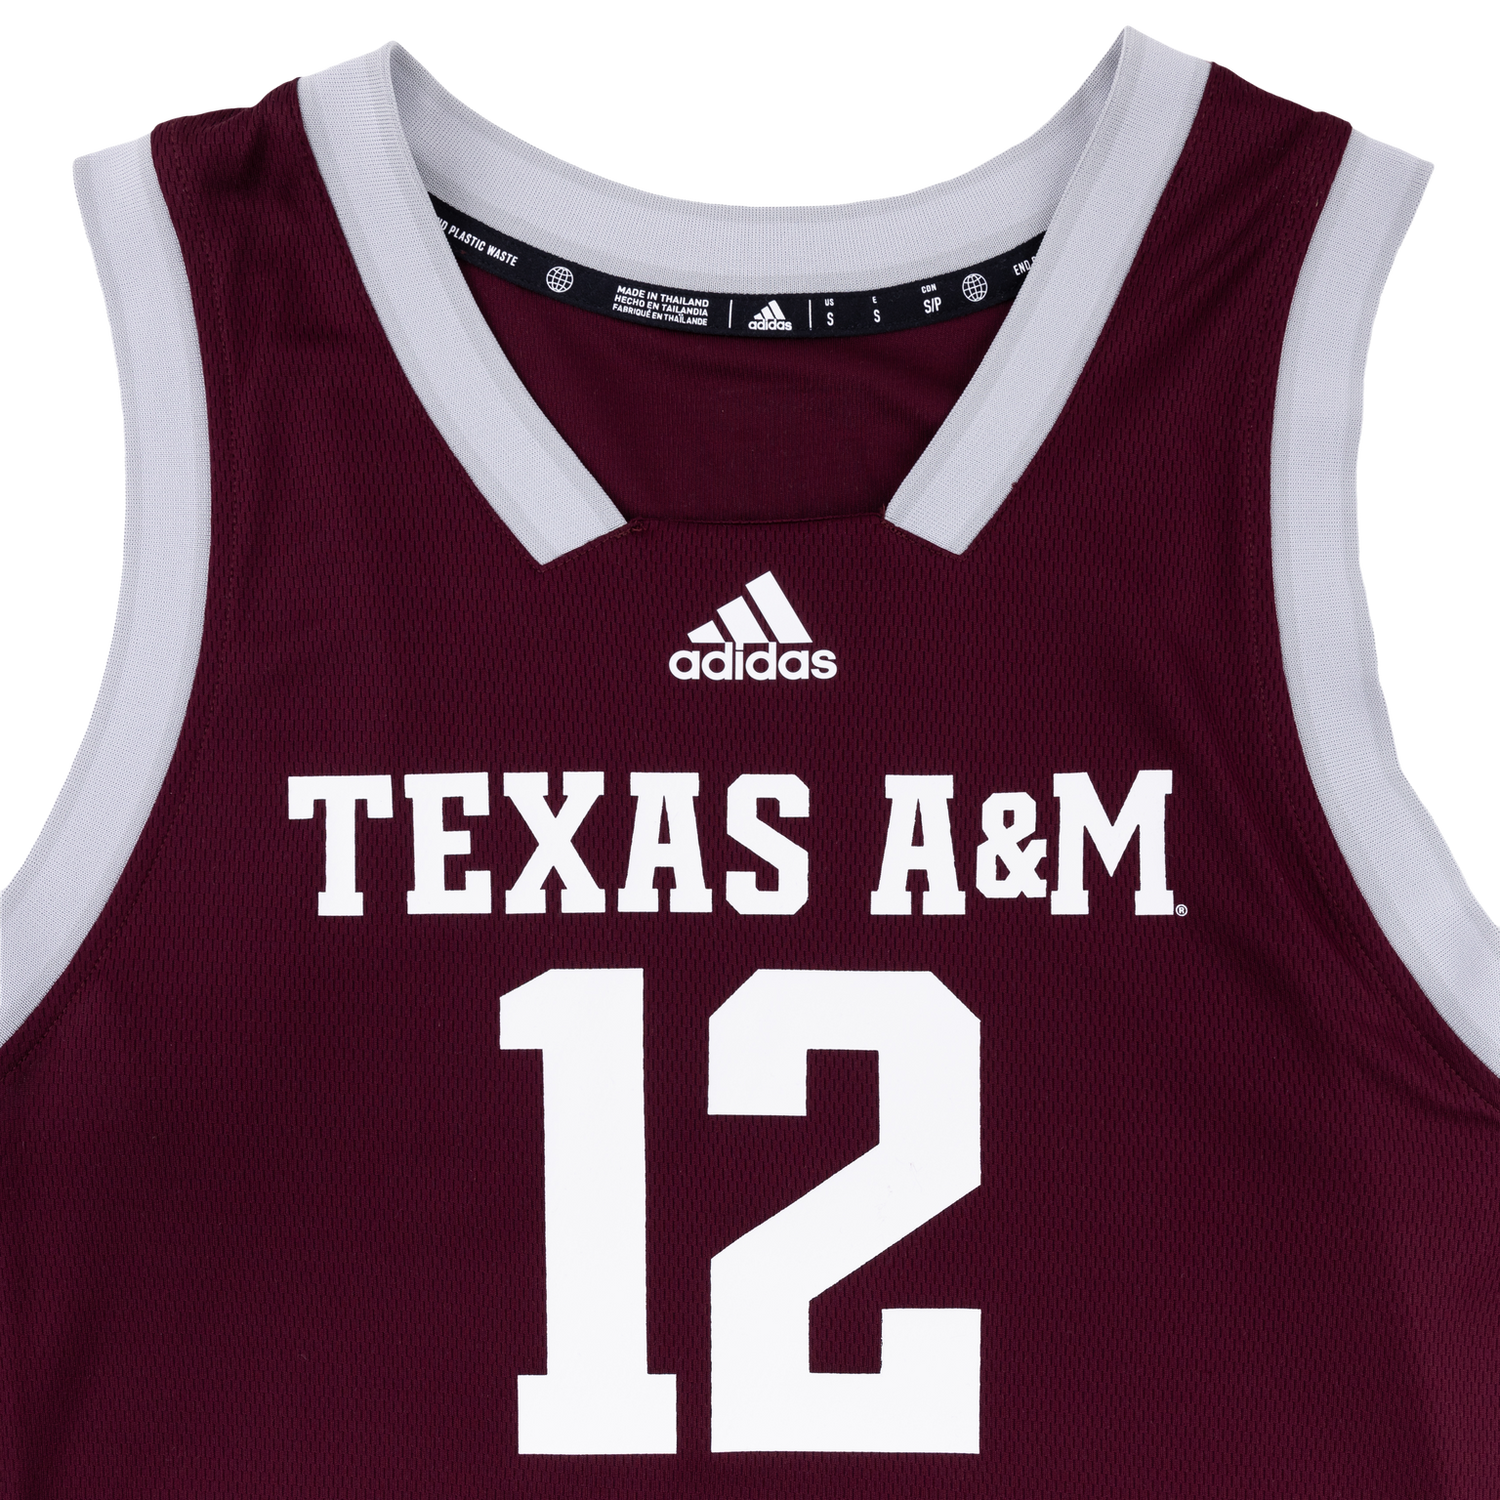 Texas A&M Adidas Swingman Basketball Jersey